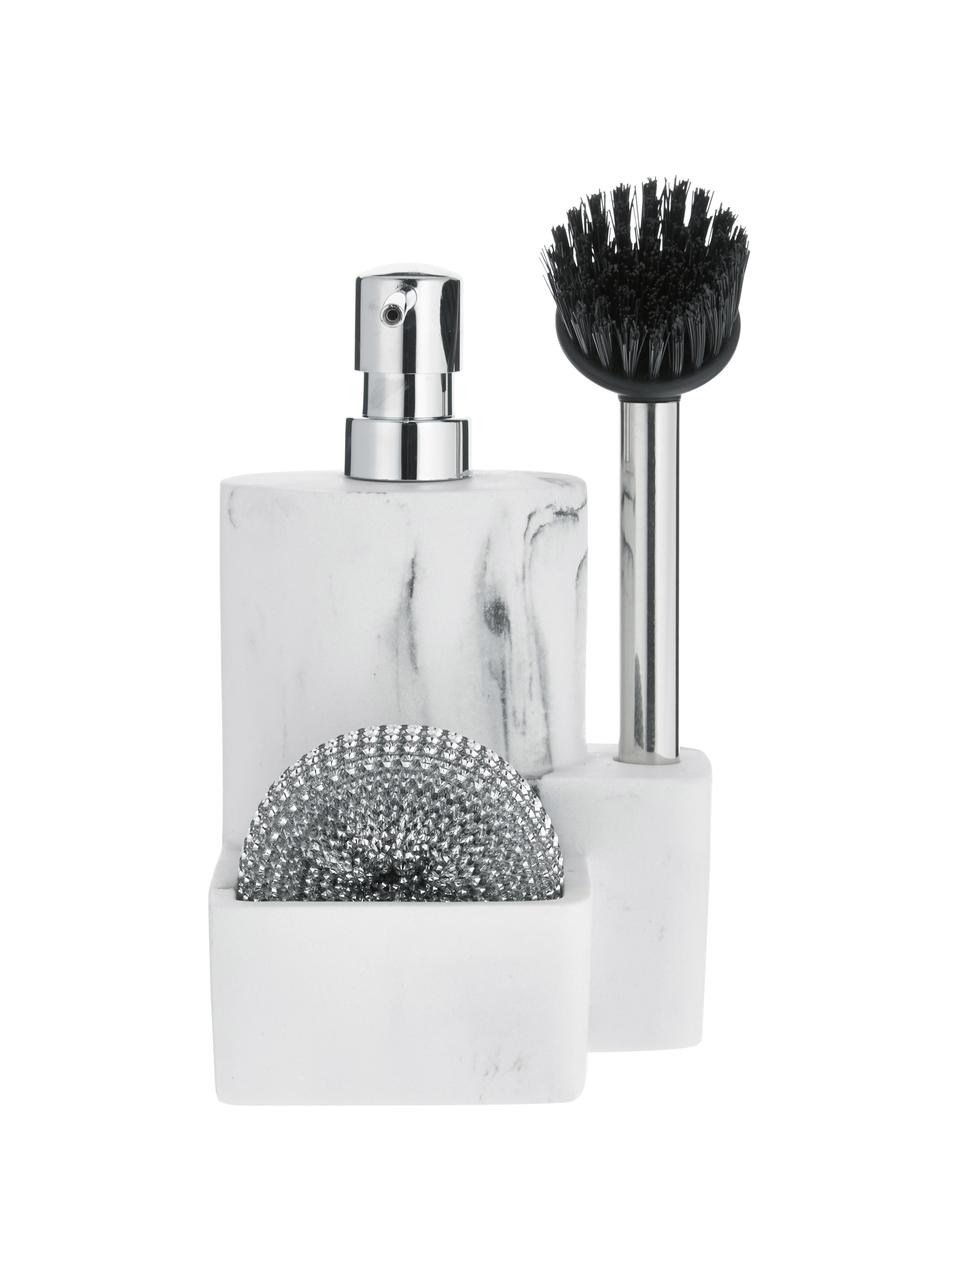 Set dispenser sapone in effetto marmo Galia 3 pz, Bianco, argento, nero, Larg. 24 x Alt. 12 cm